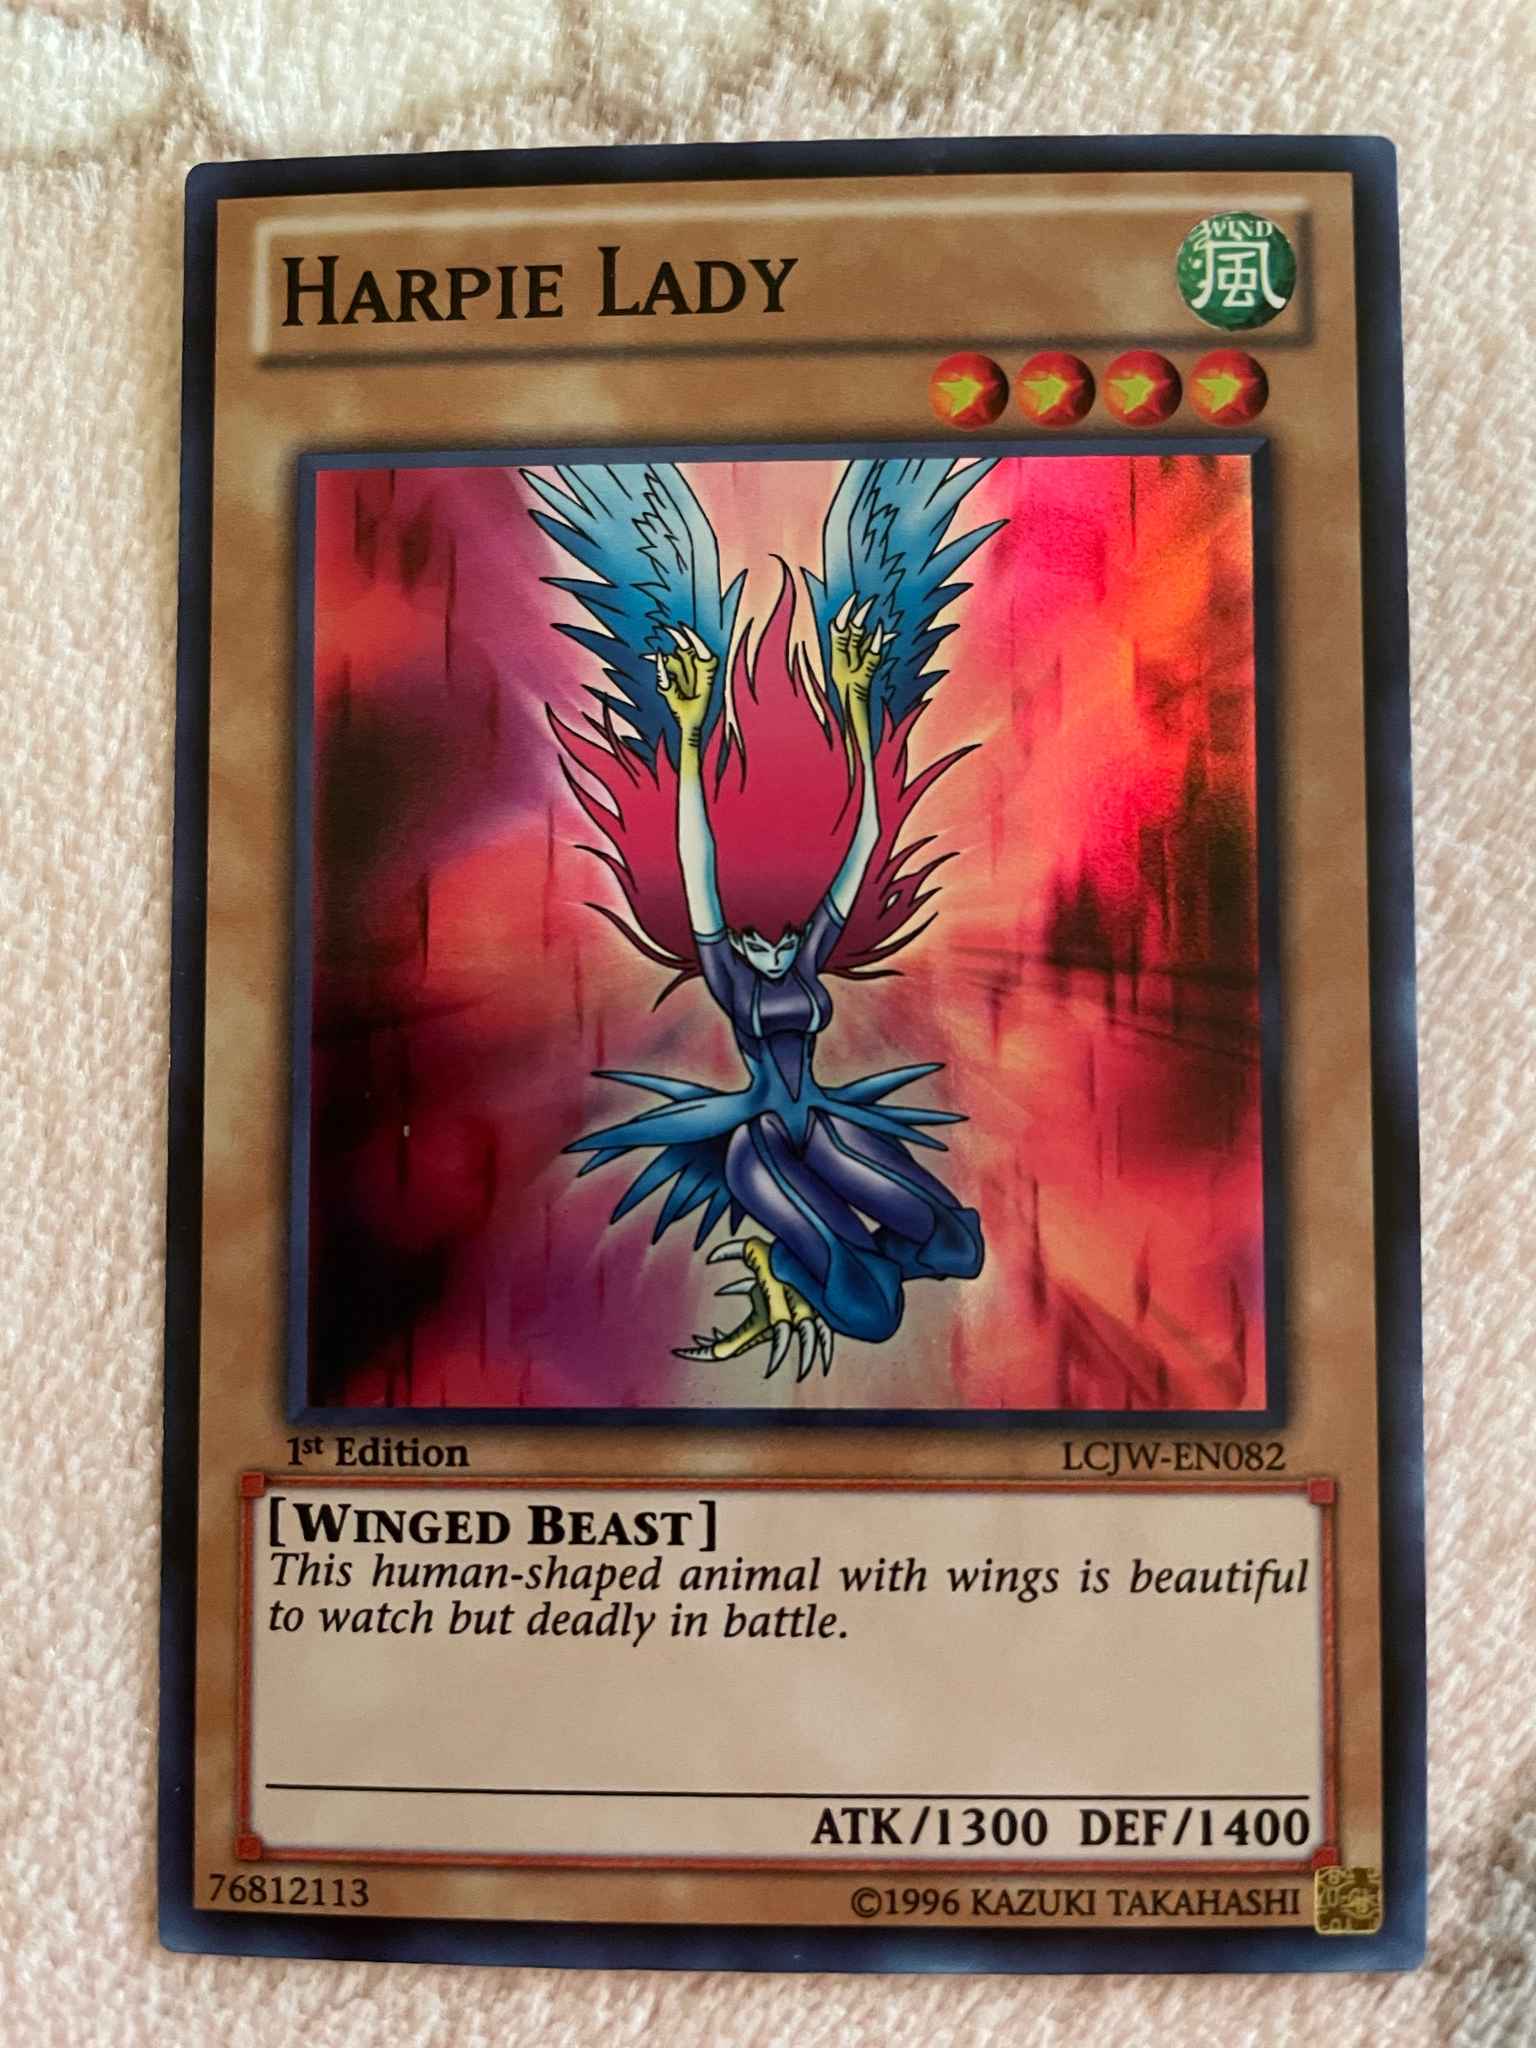 Super Rare Legendary Collection 4 LCJW-EN082 Joey's World 1X NM Harpie Lady 